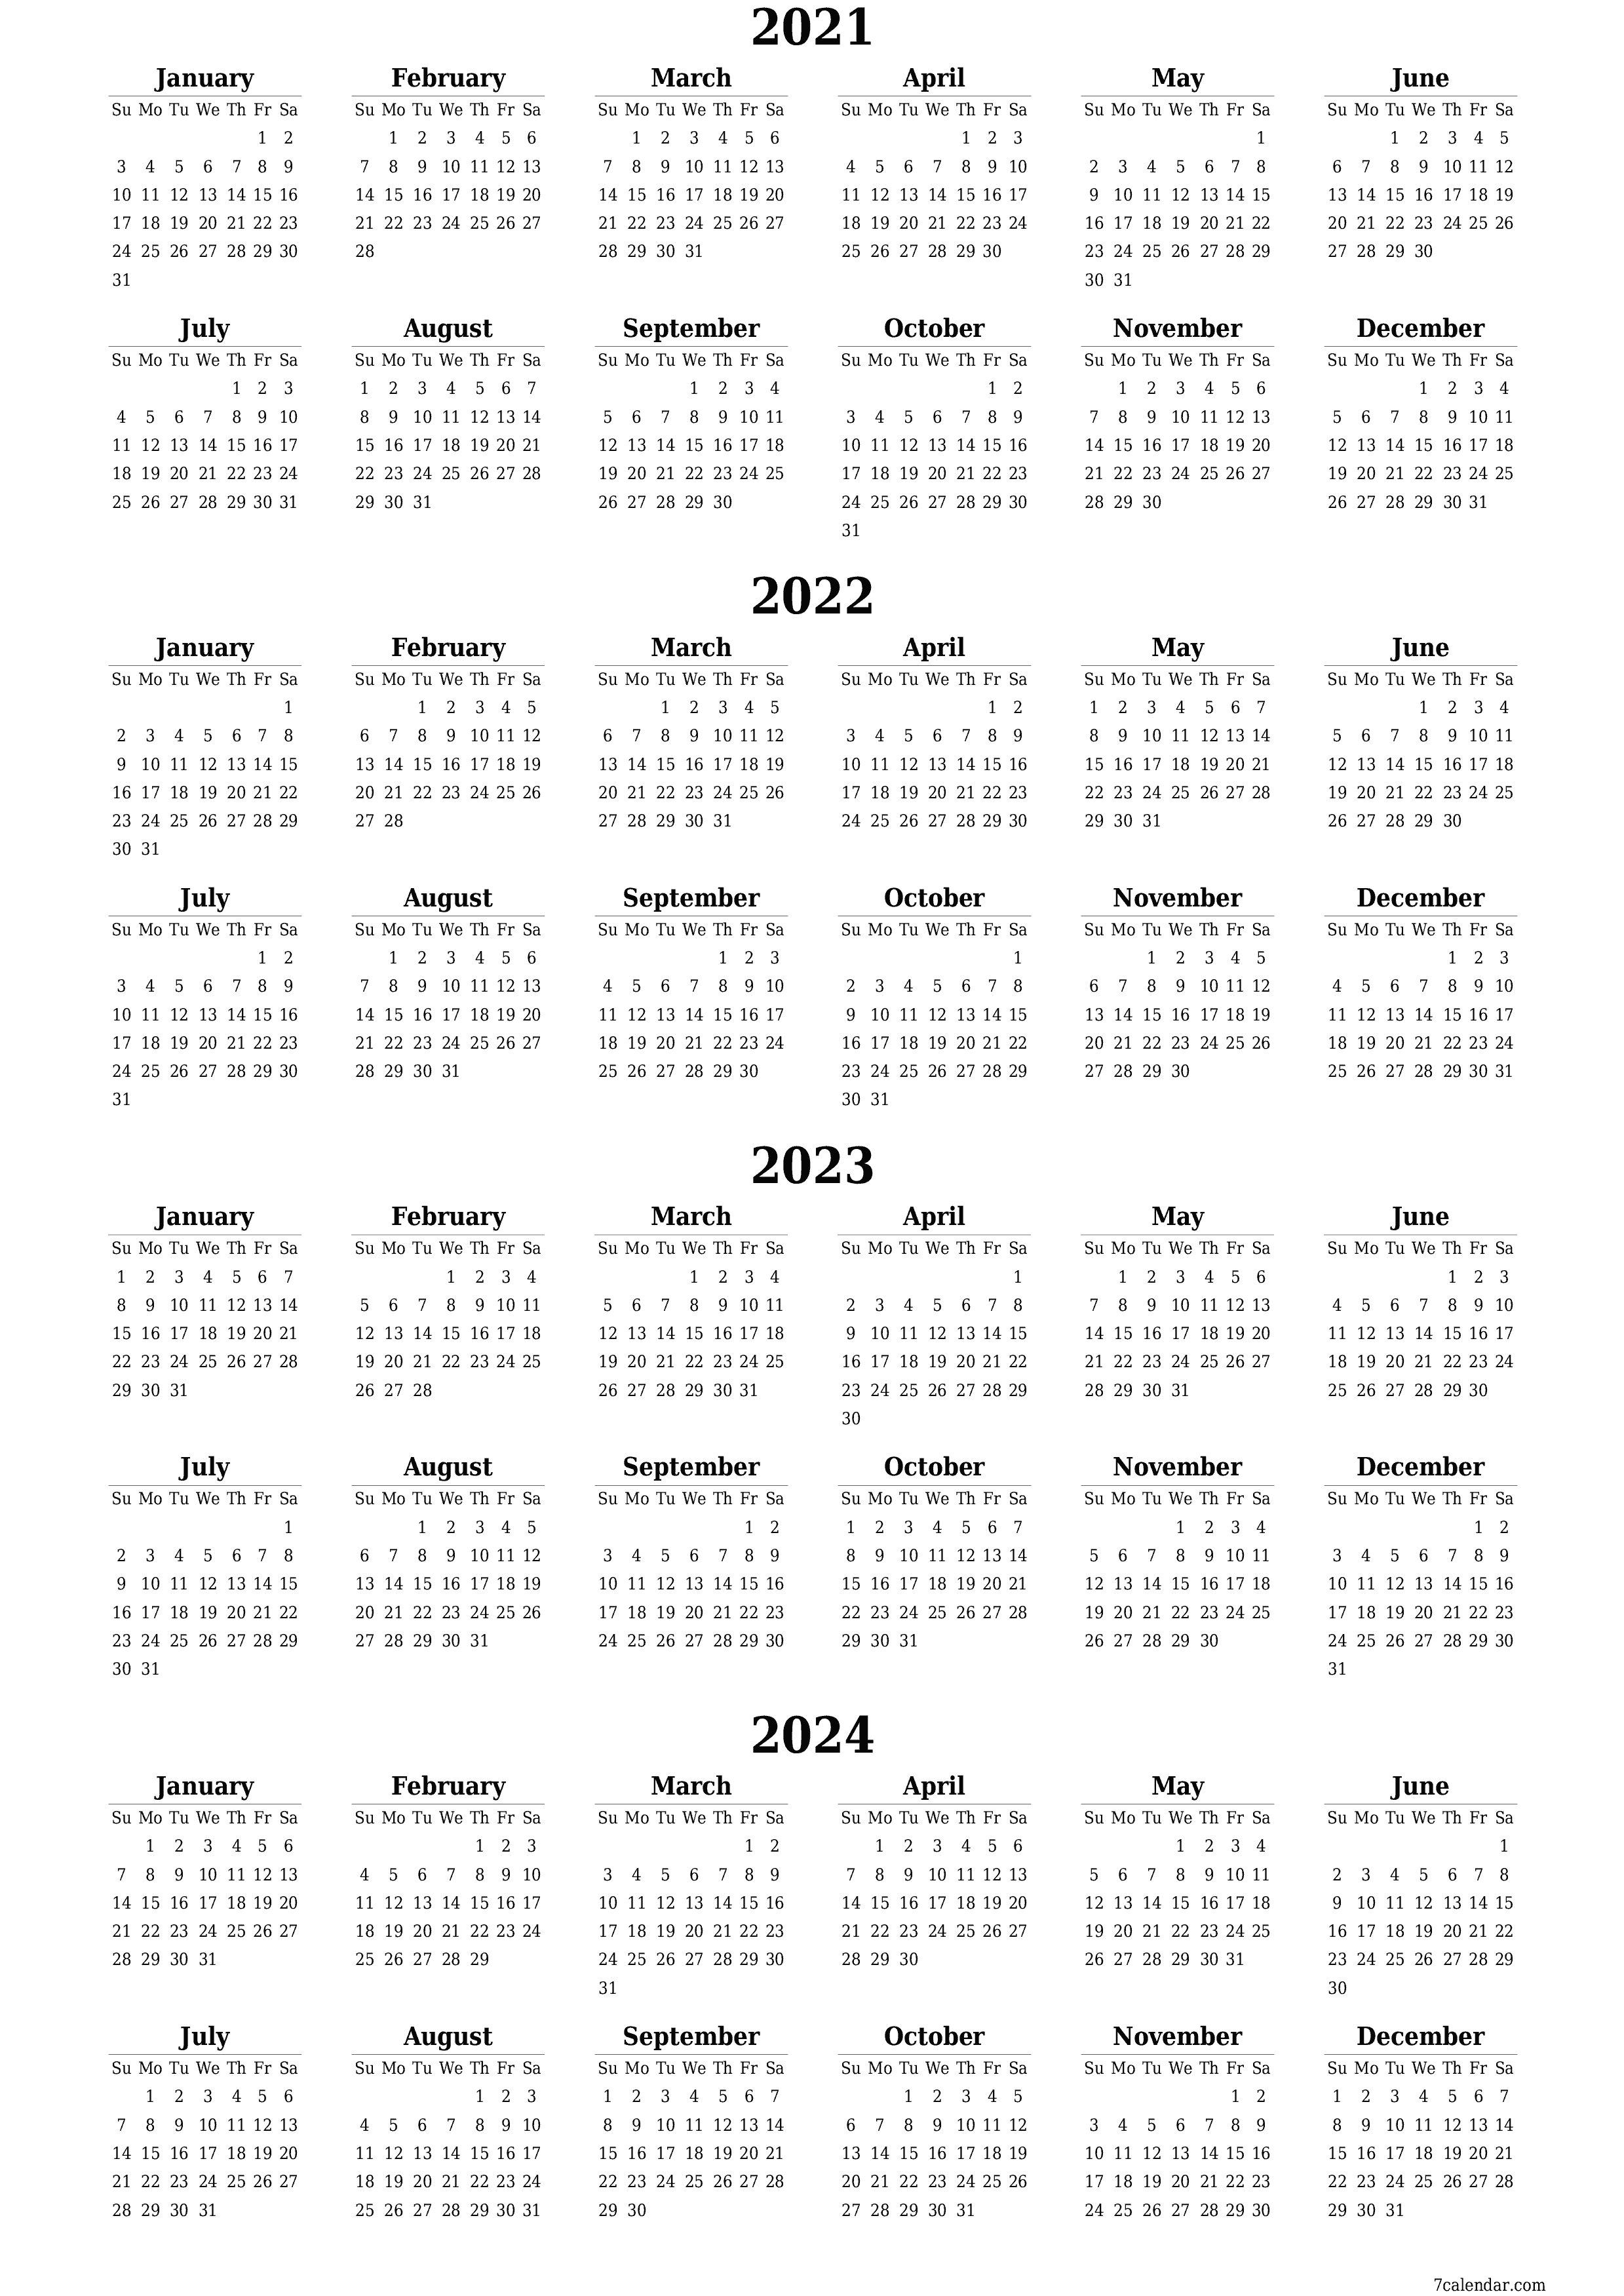 printable wall template free vertical Yearly calendar September (Sep) 2021